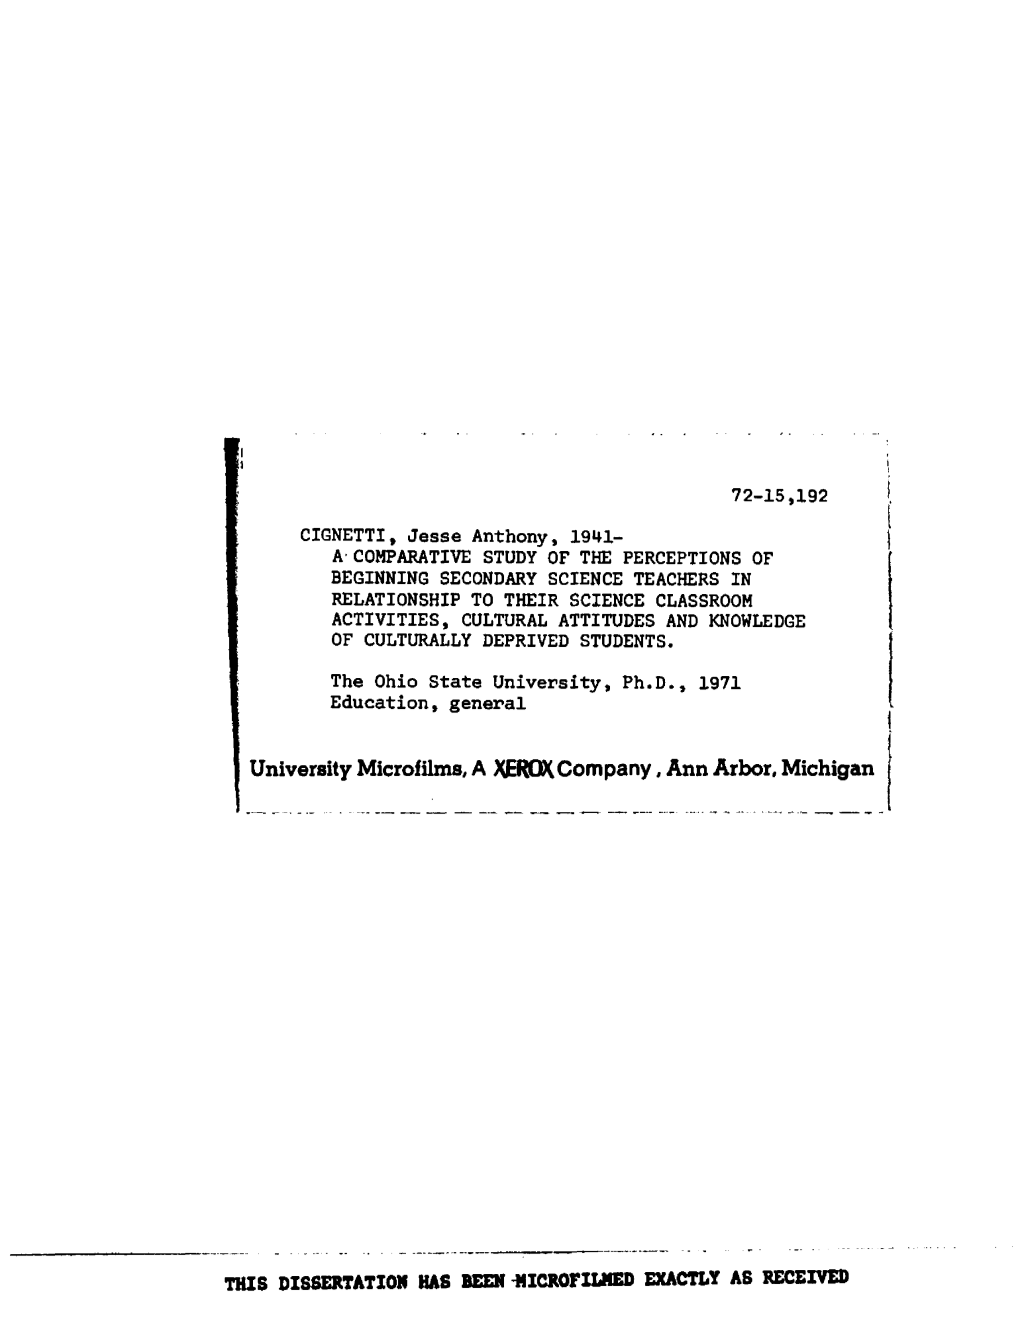 University Microfilms, a XEROX Company, Ann Arbor, Michigan